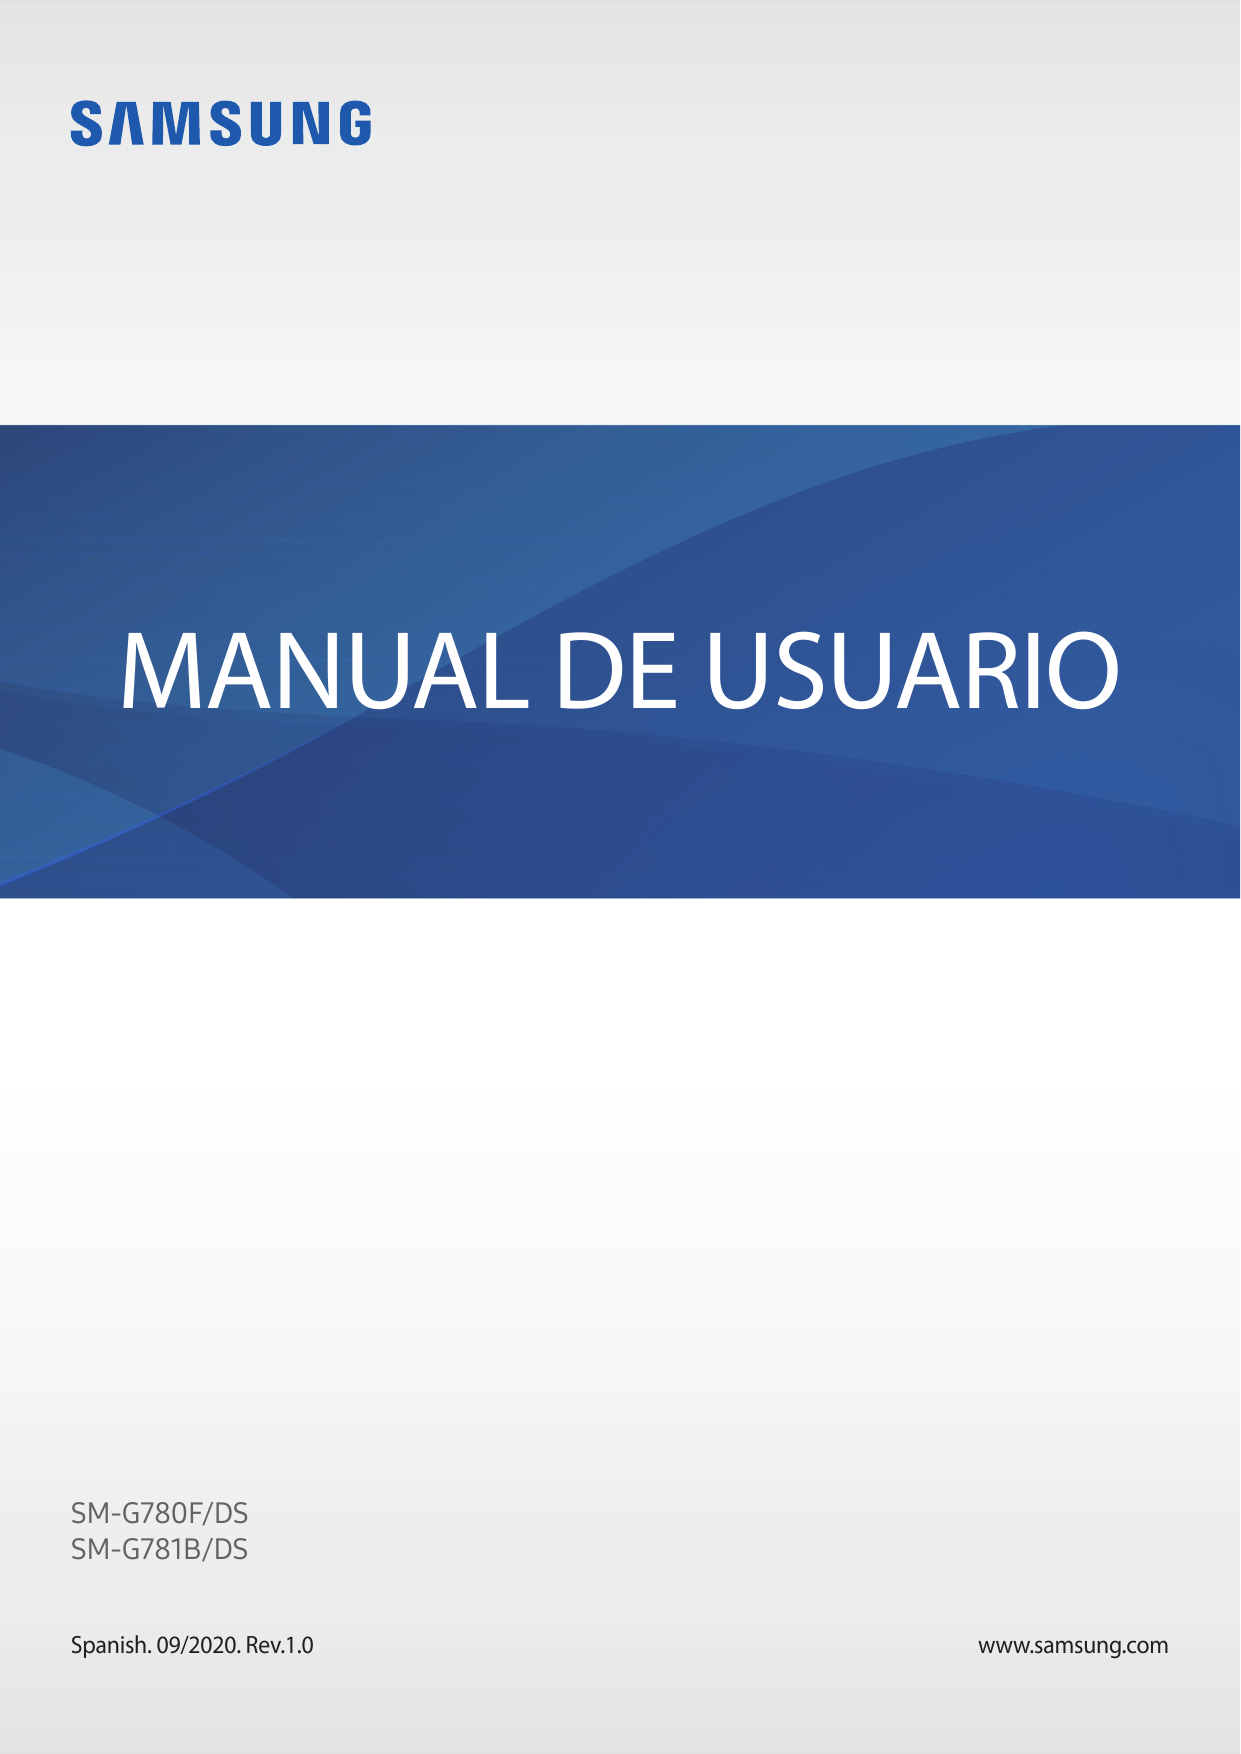 MANUAL DE USUARIOSM-G780F/DSSM-G781B/DSSpanish. 09/2020. Rev.1.0www.samsung.com